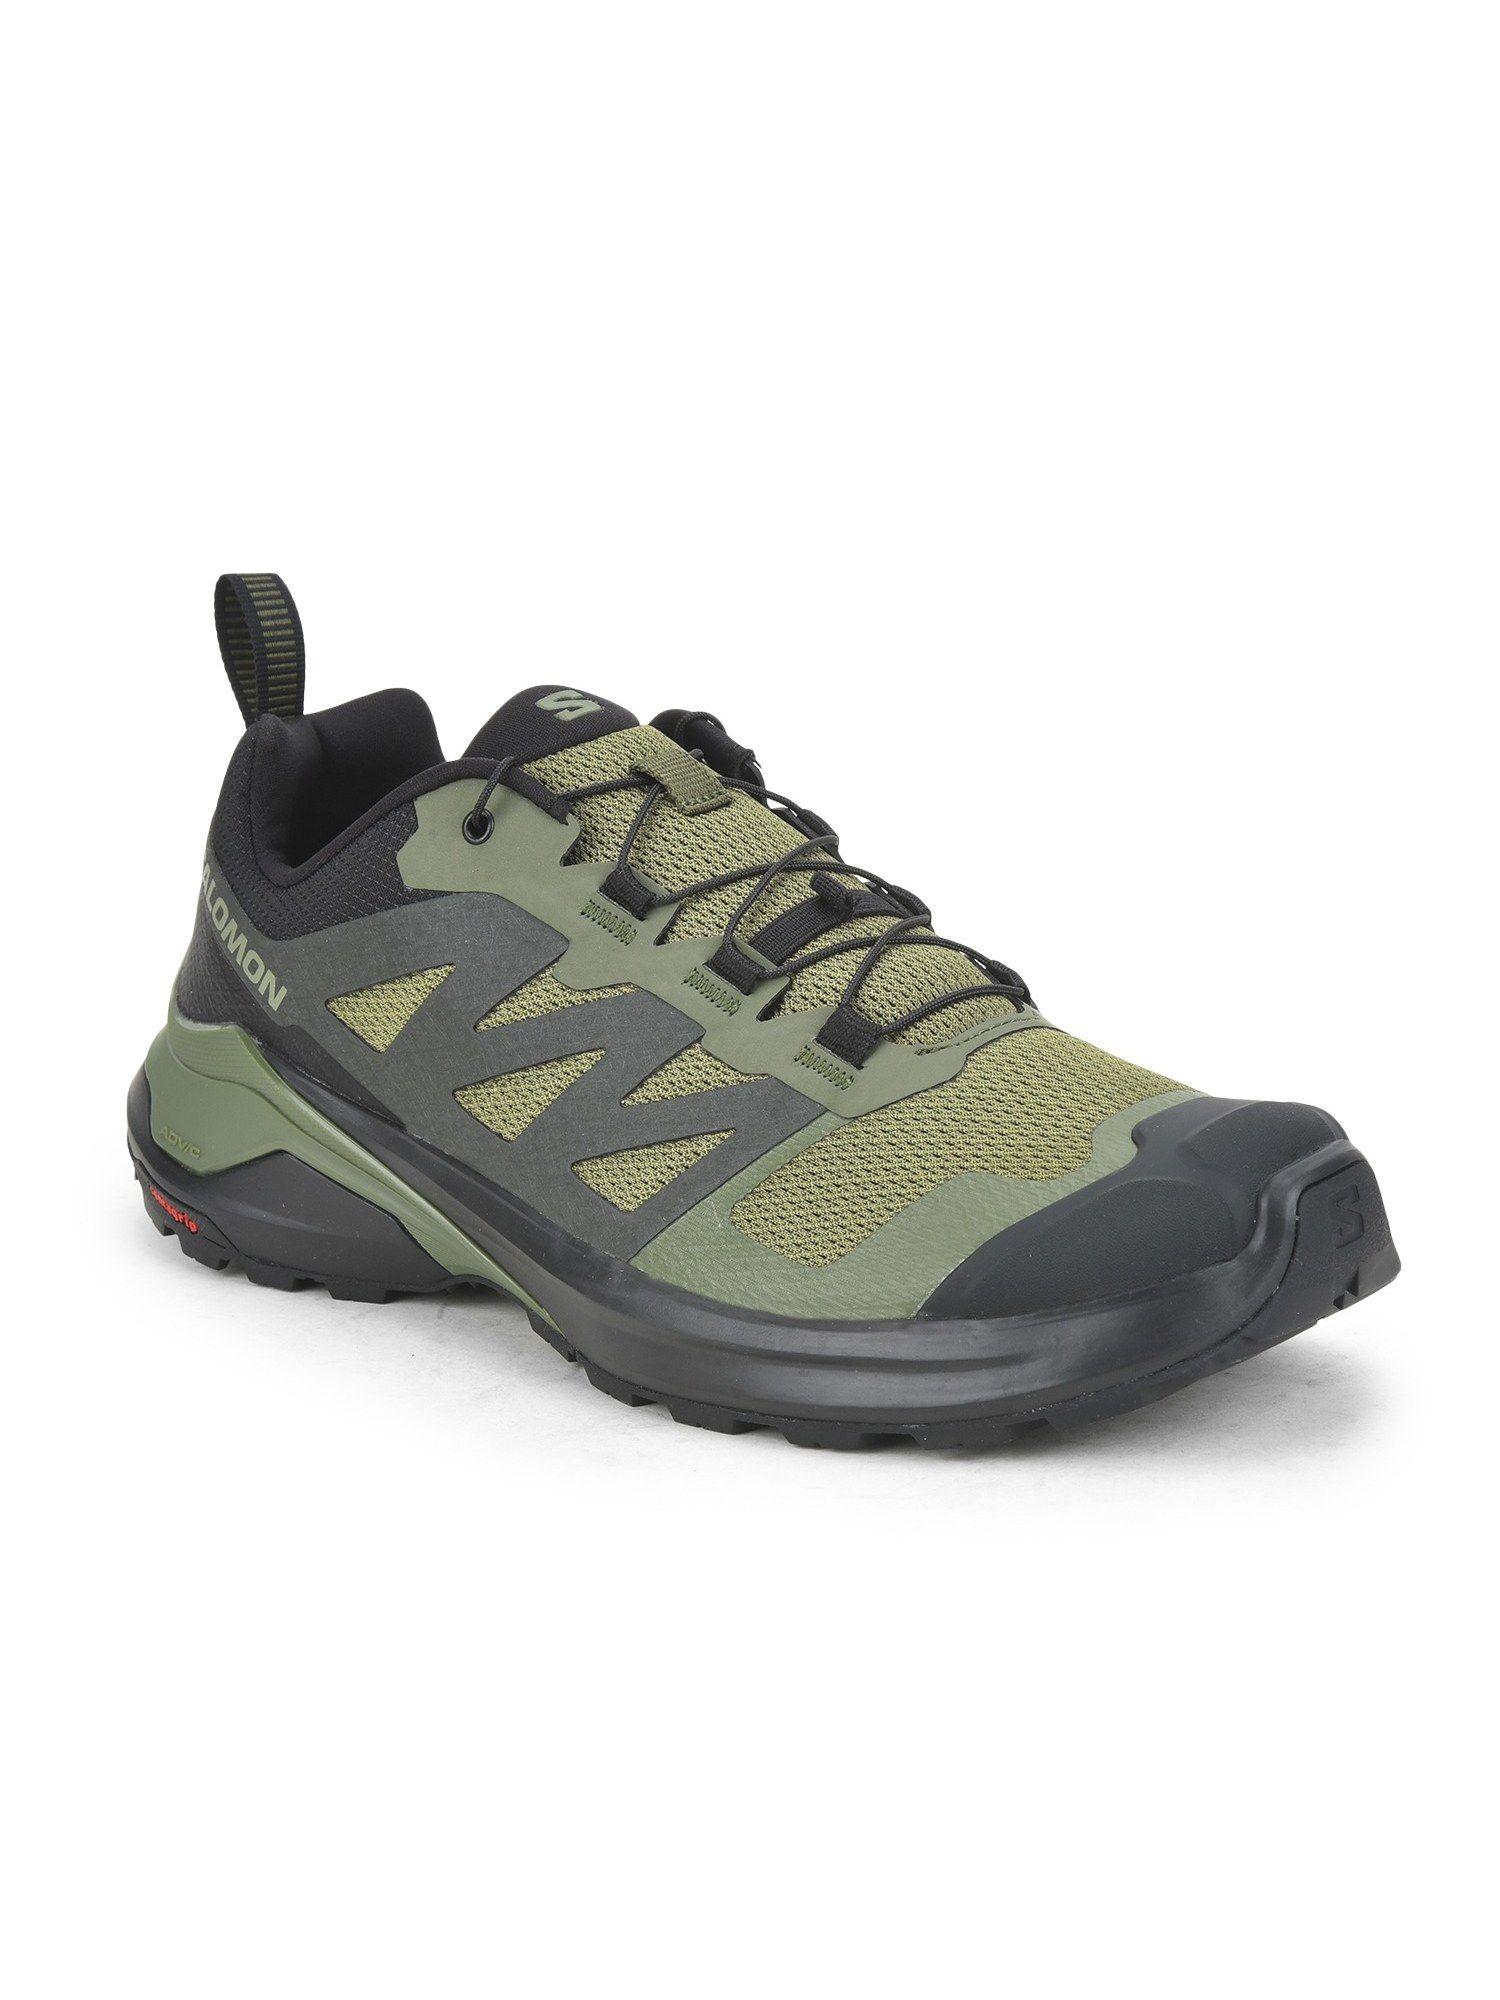 mens x-adventure trail running shoe